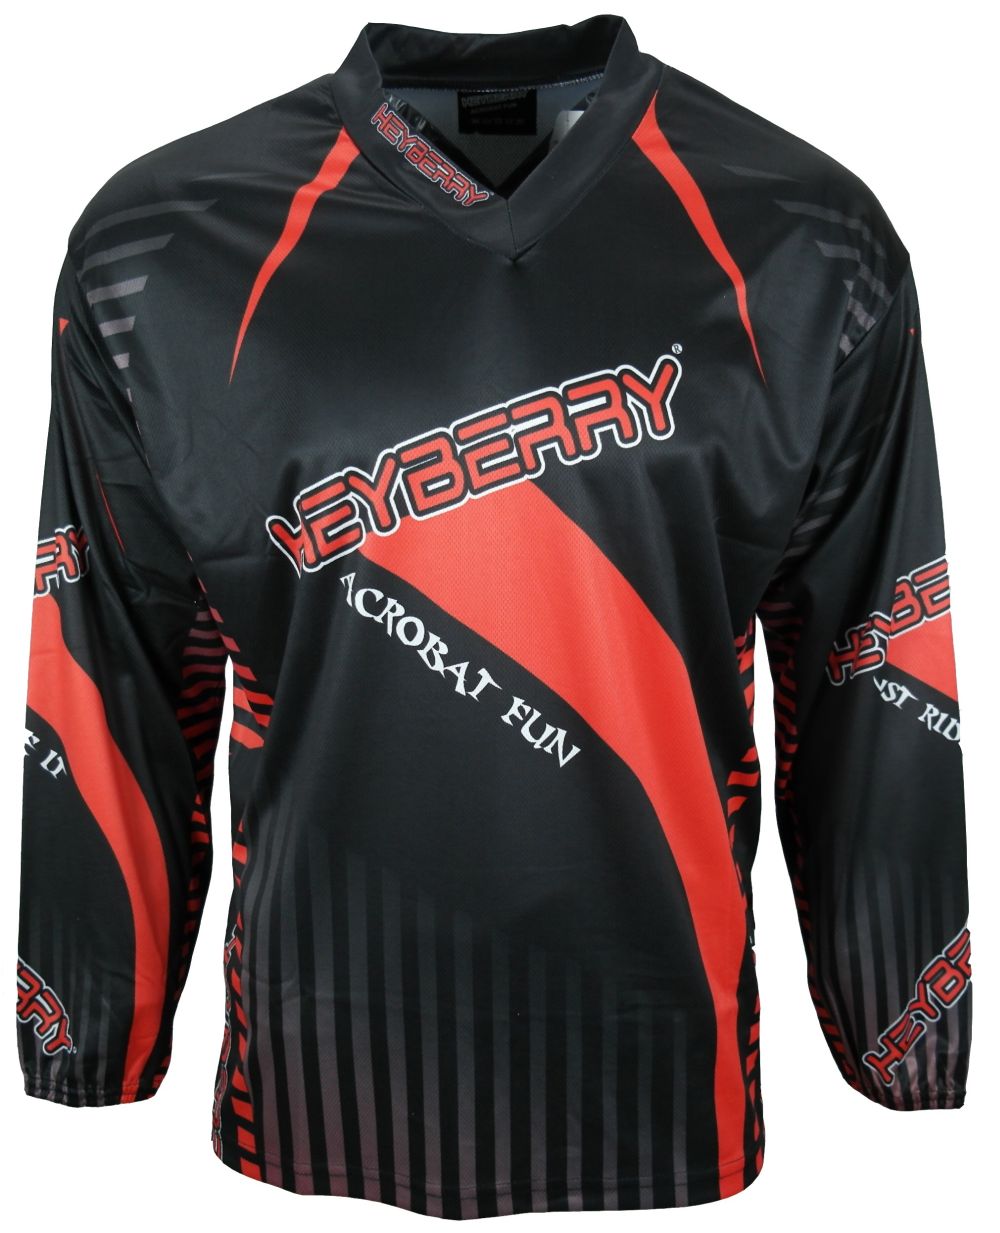 Heyberry Motocross MX Shirt Jersey Trikot schwarz rot Größe M L XL XXL